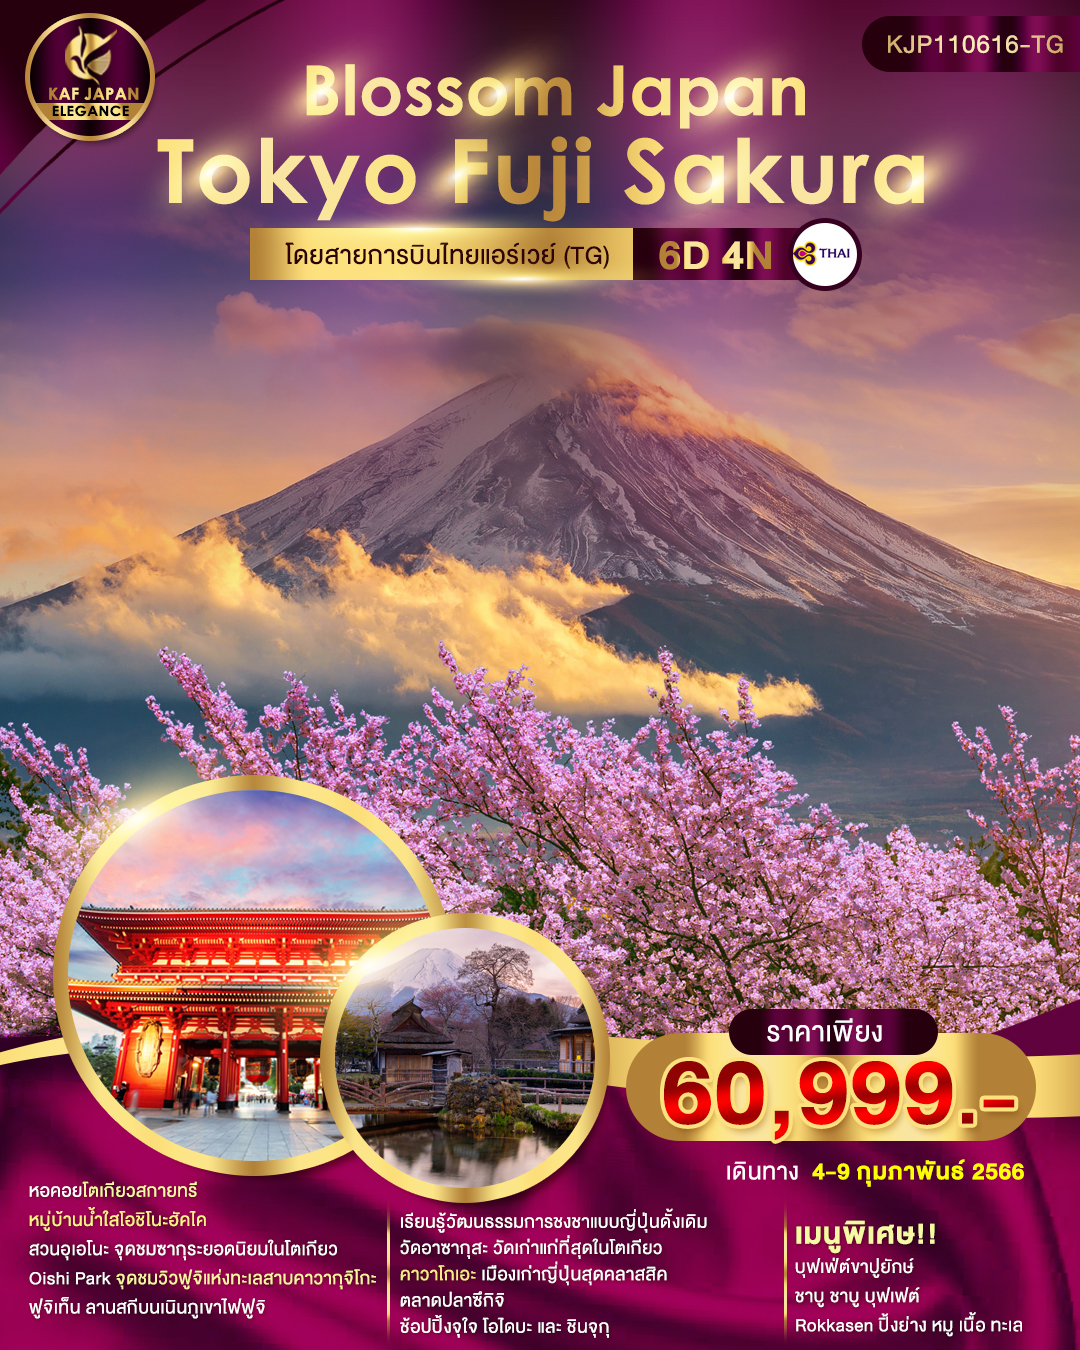  Blossom Japan Tokyo Fuji Sakura